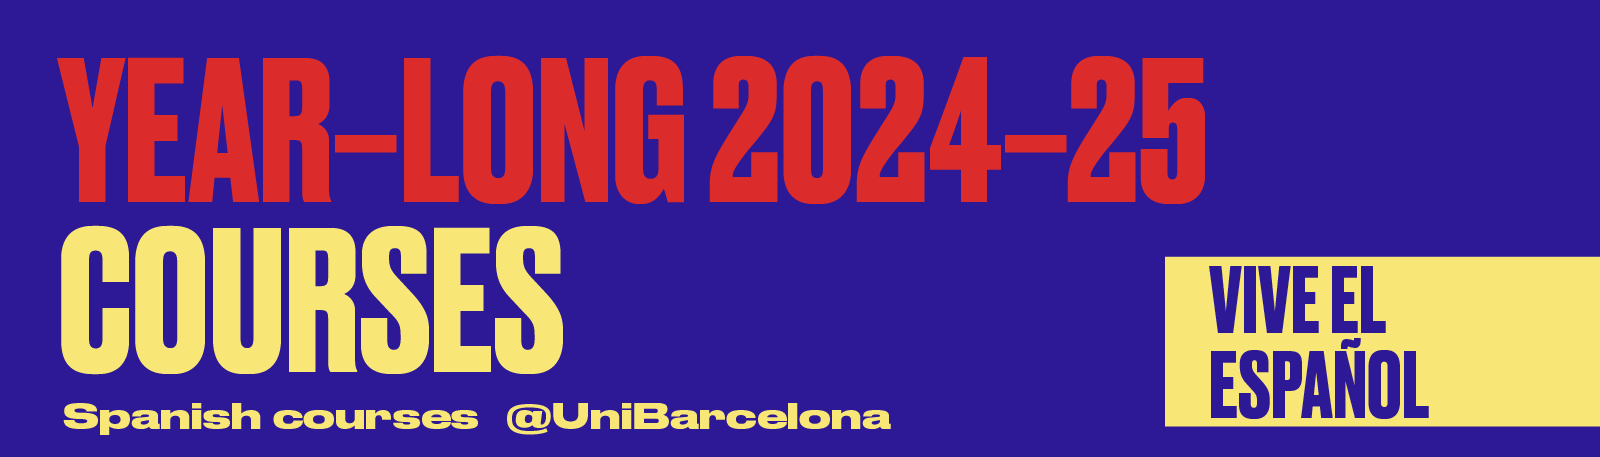 Year-long 2024-25